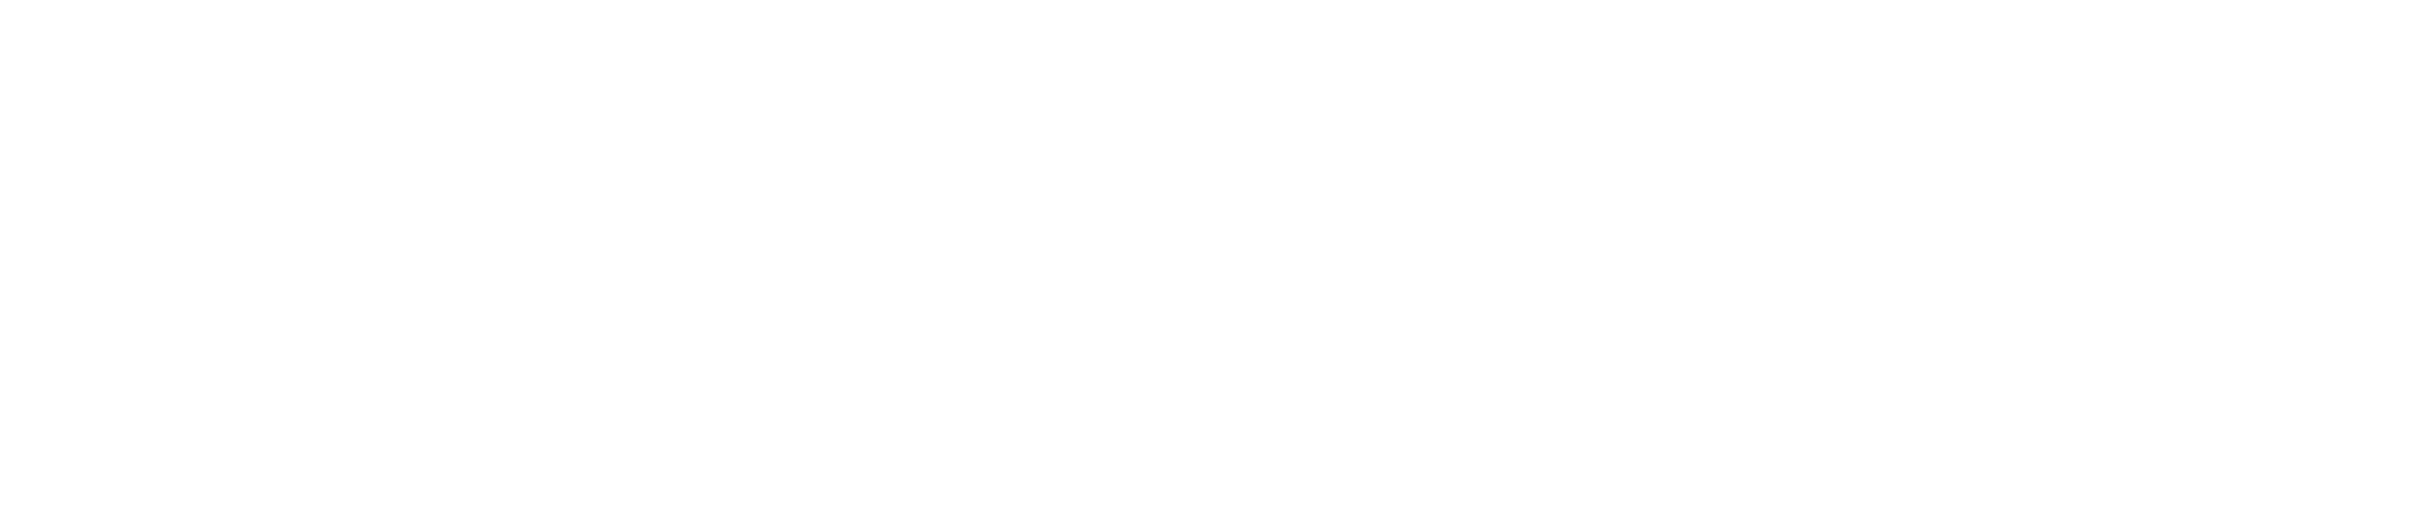 MetaNFT Brand